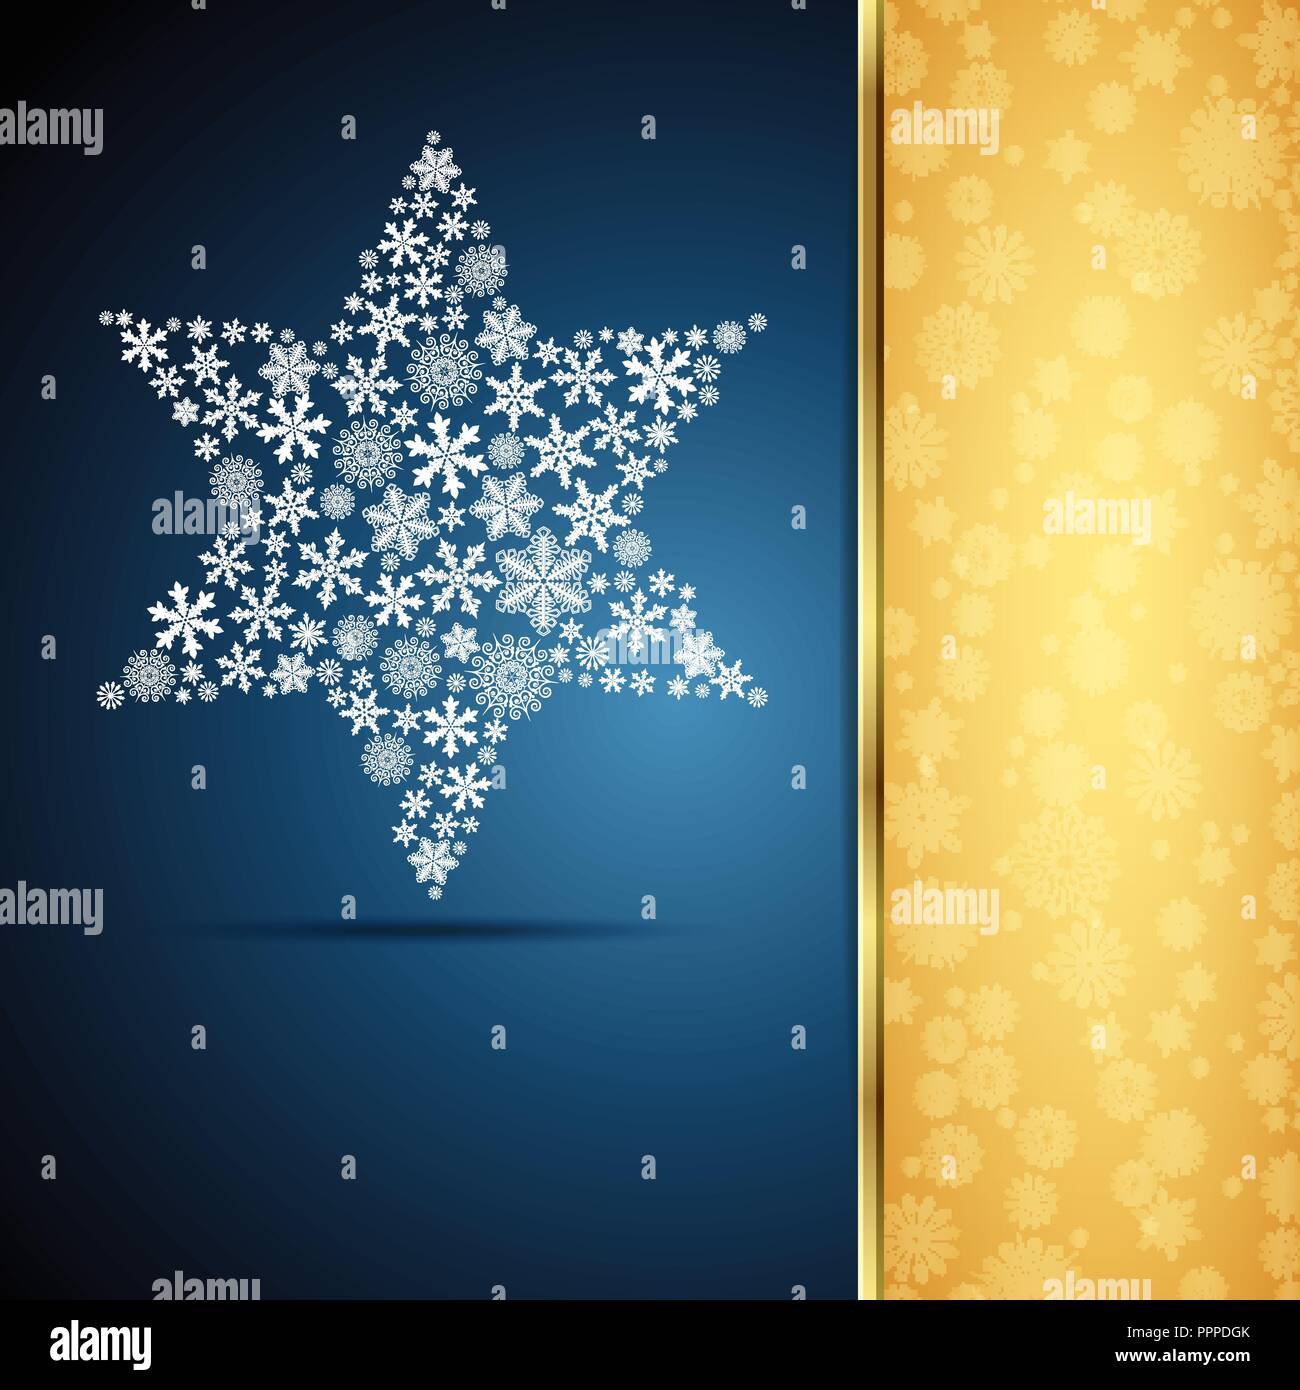 Christmas star, snowflake design background. Stock Vector